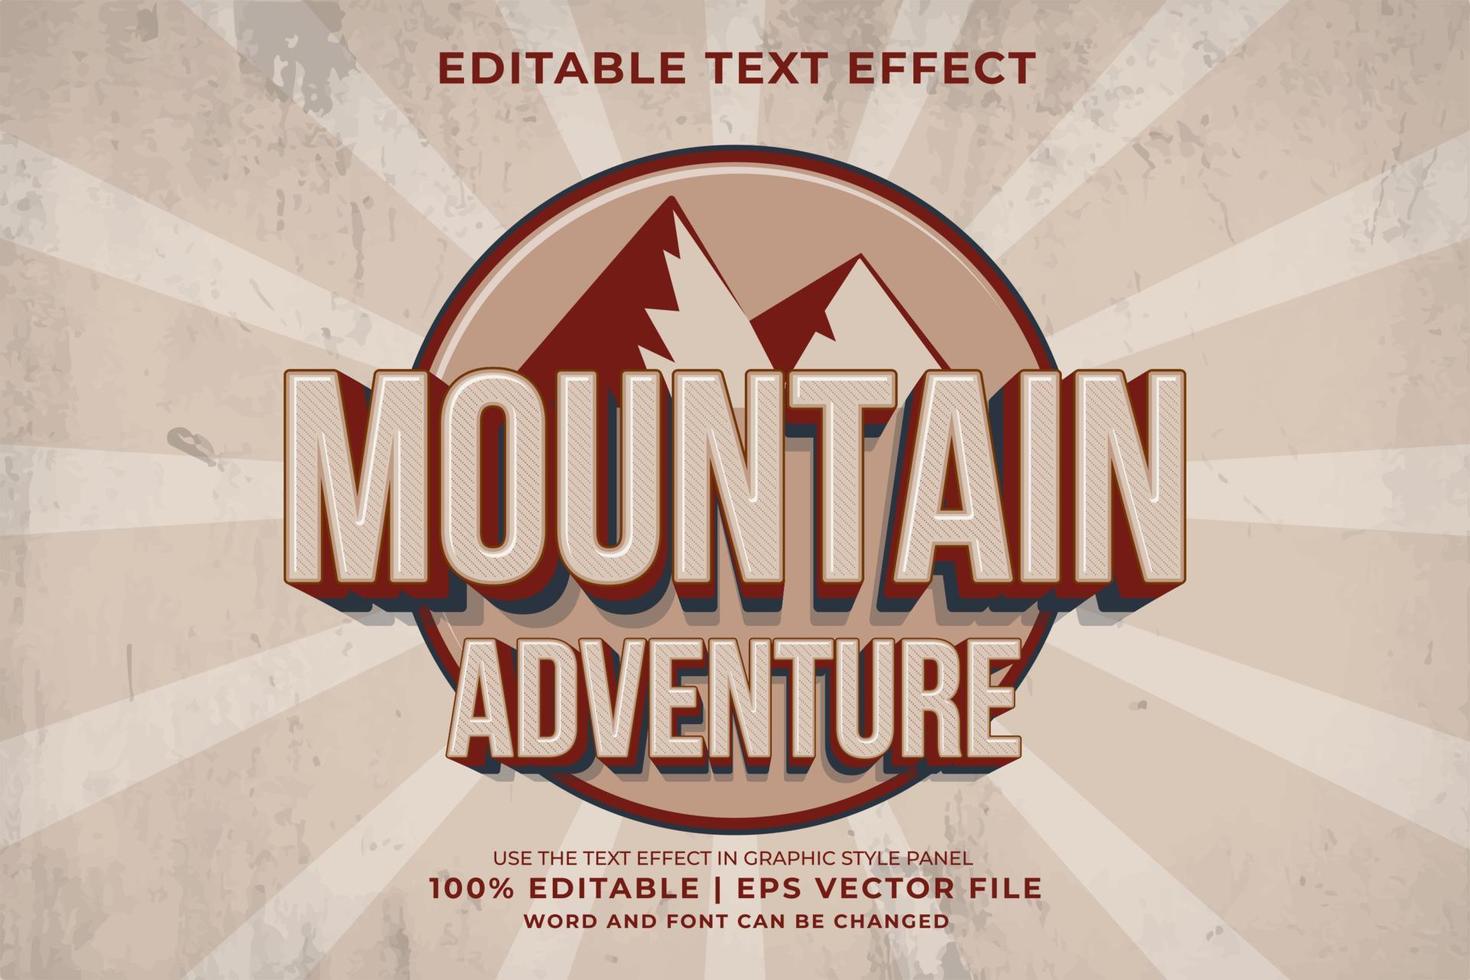 efeito de texto editável - estilo de modelo de logotipo retrô 3d de aventura na montanha vetor premium